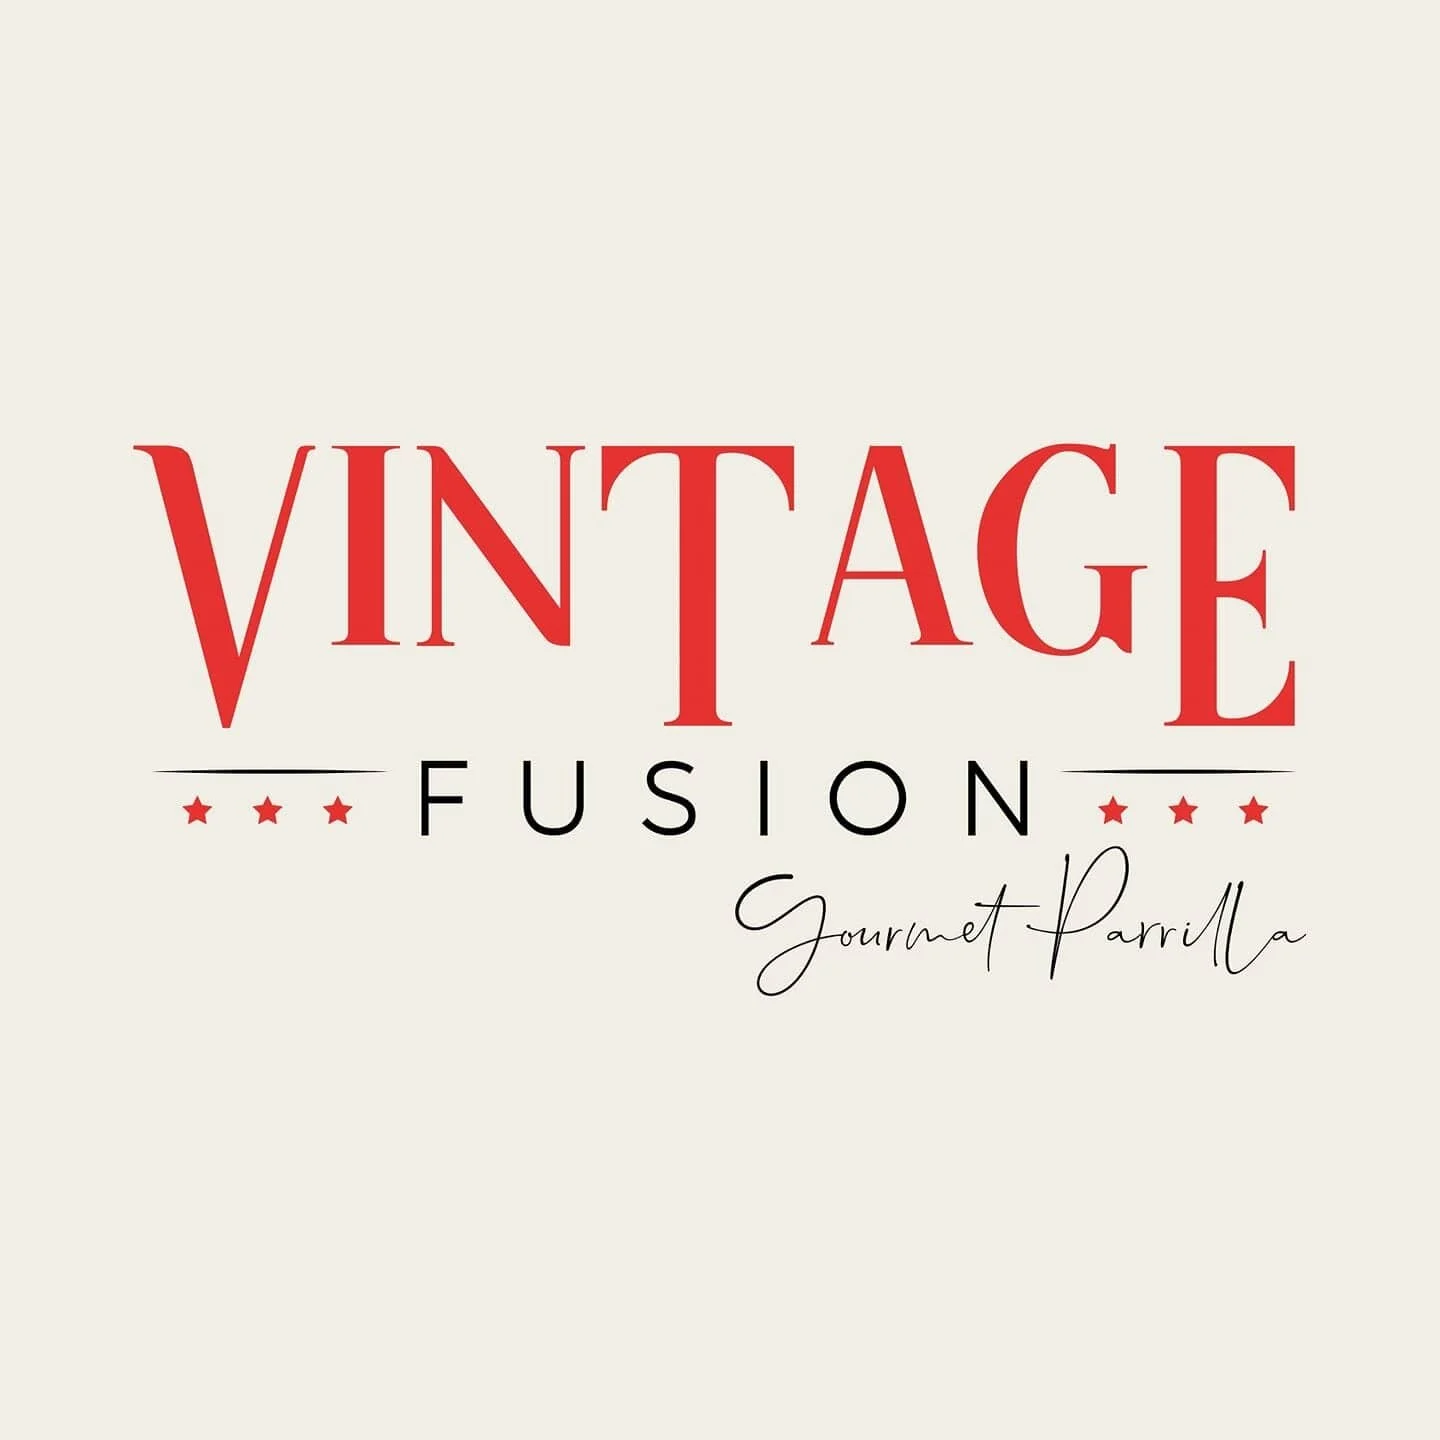 Restaurante-vintage-fusion-gourmet-parrilla-25918